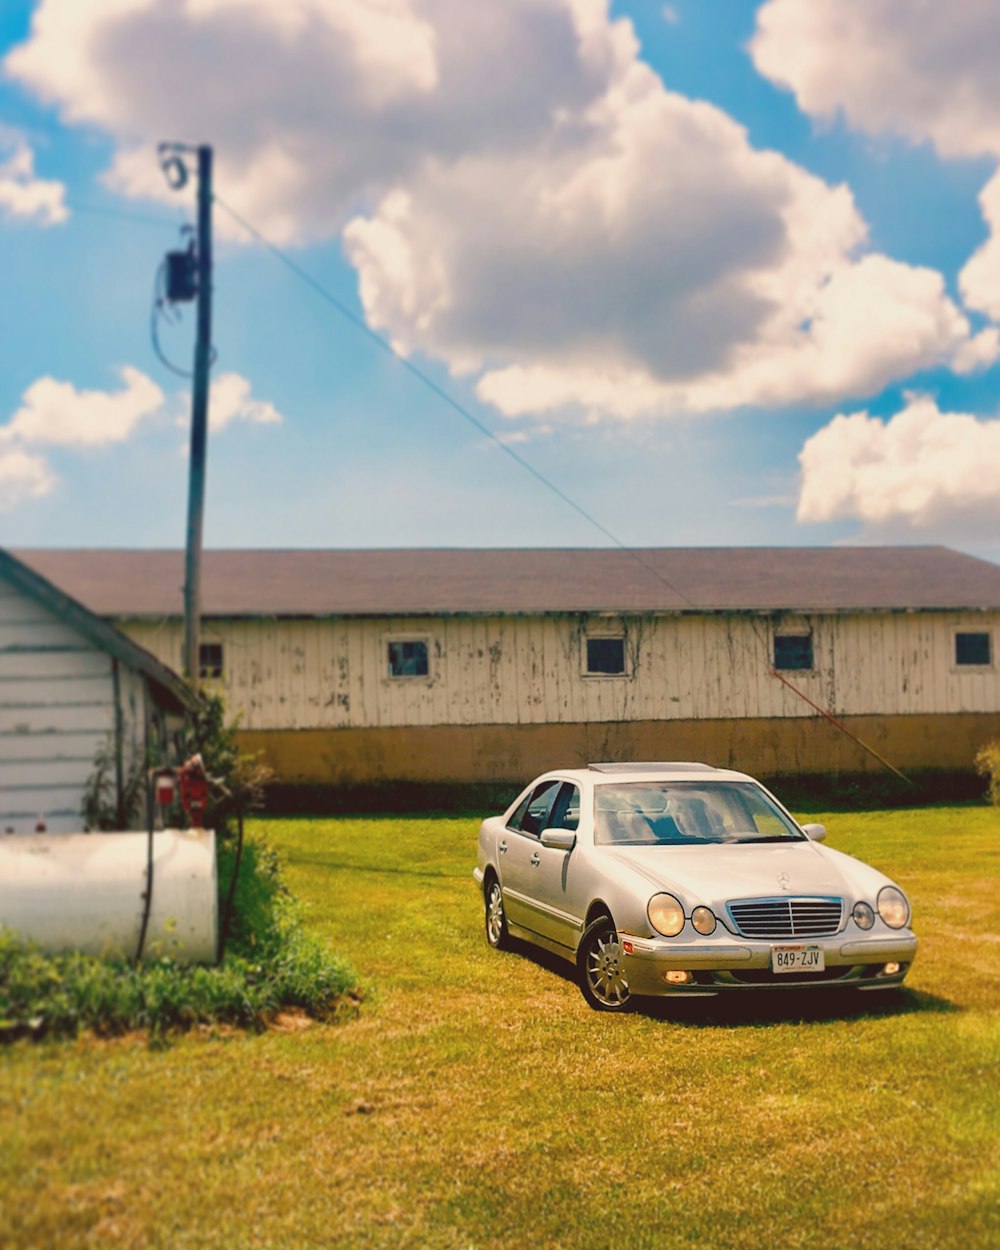 classic gray Mercedes Benz sedan parked on grass field beside house